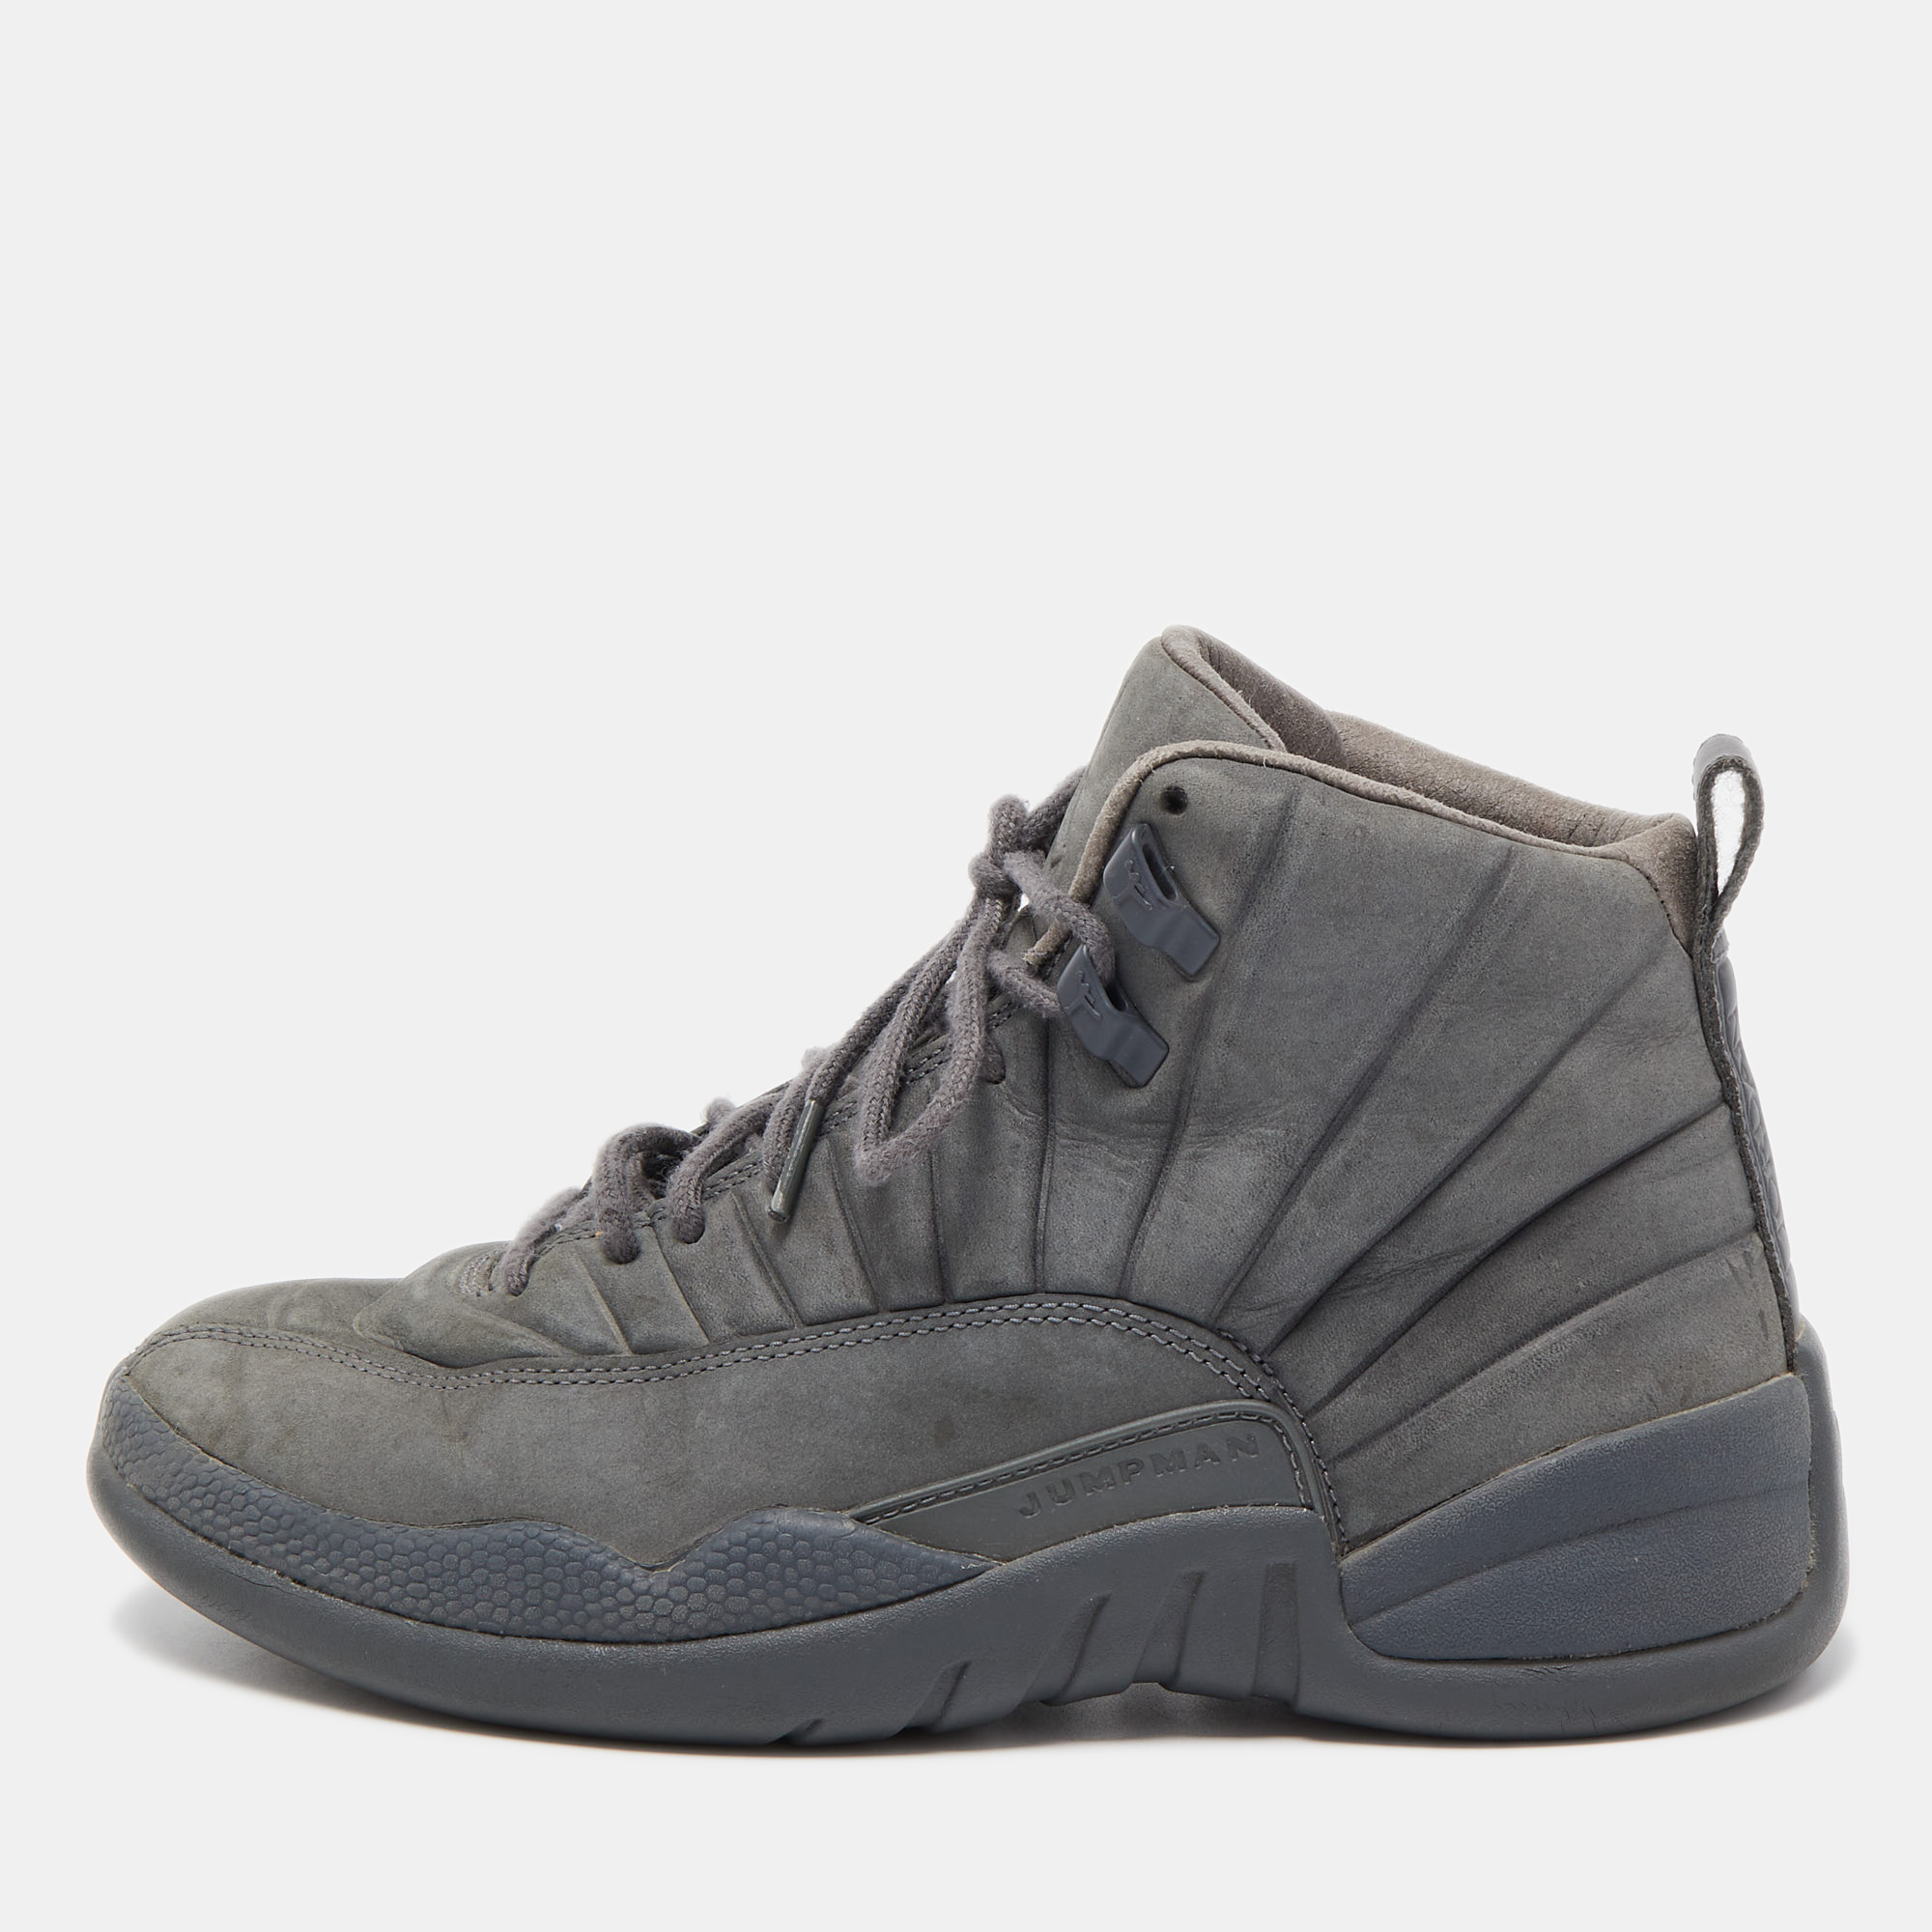 Air Jordans Grey Nubuck Leather High Top Sneakers Size 41